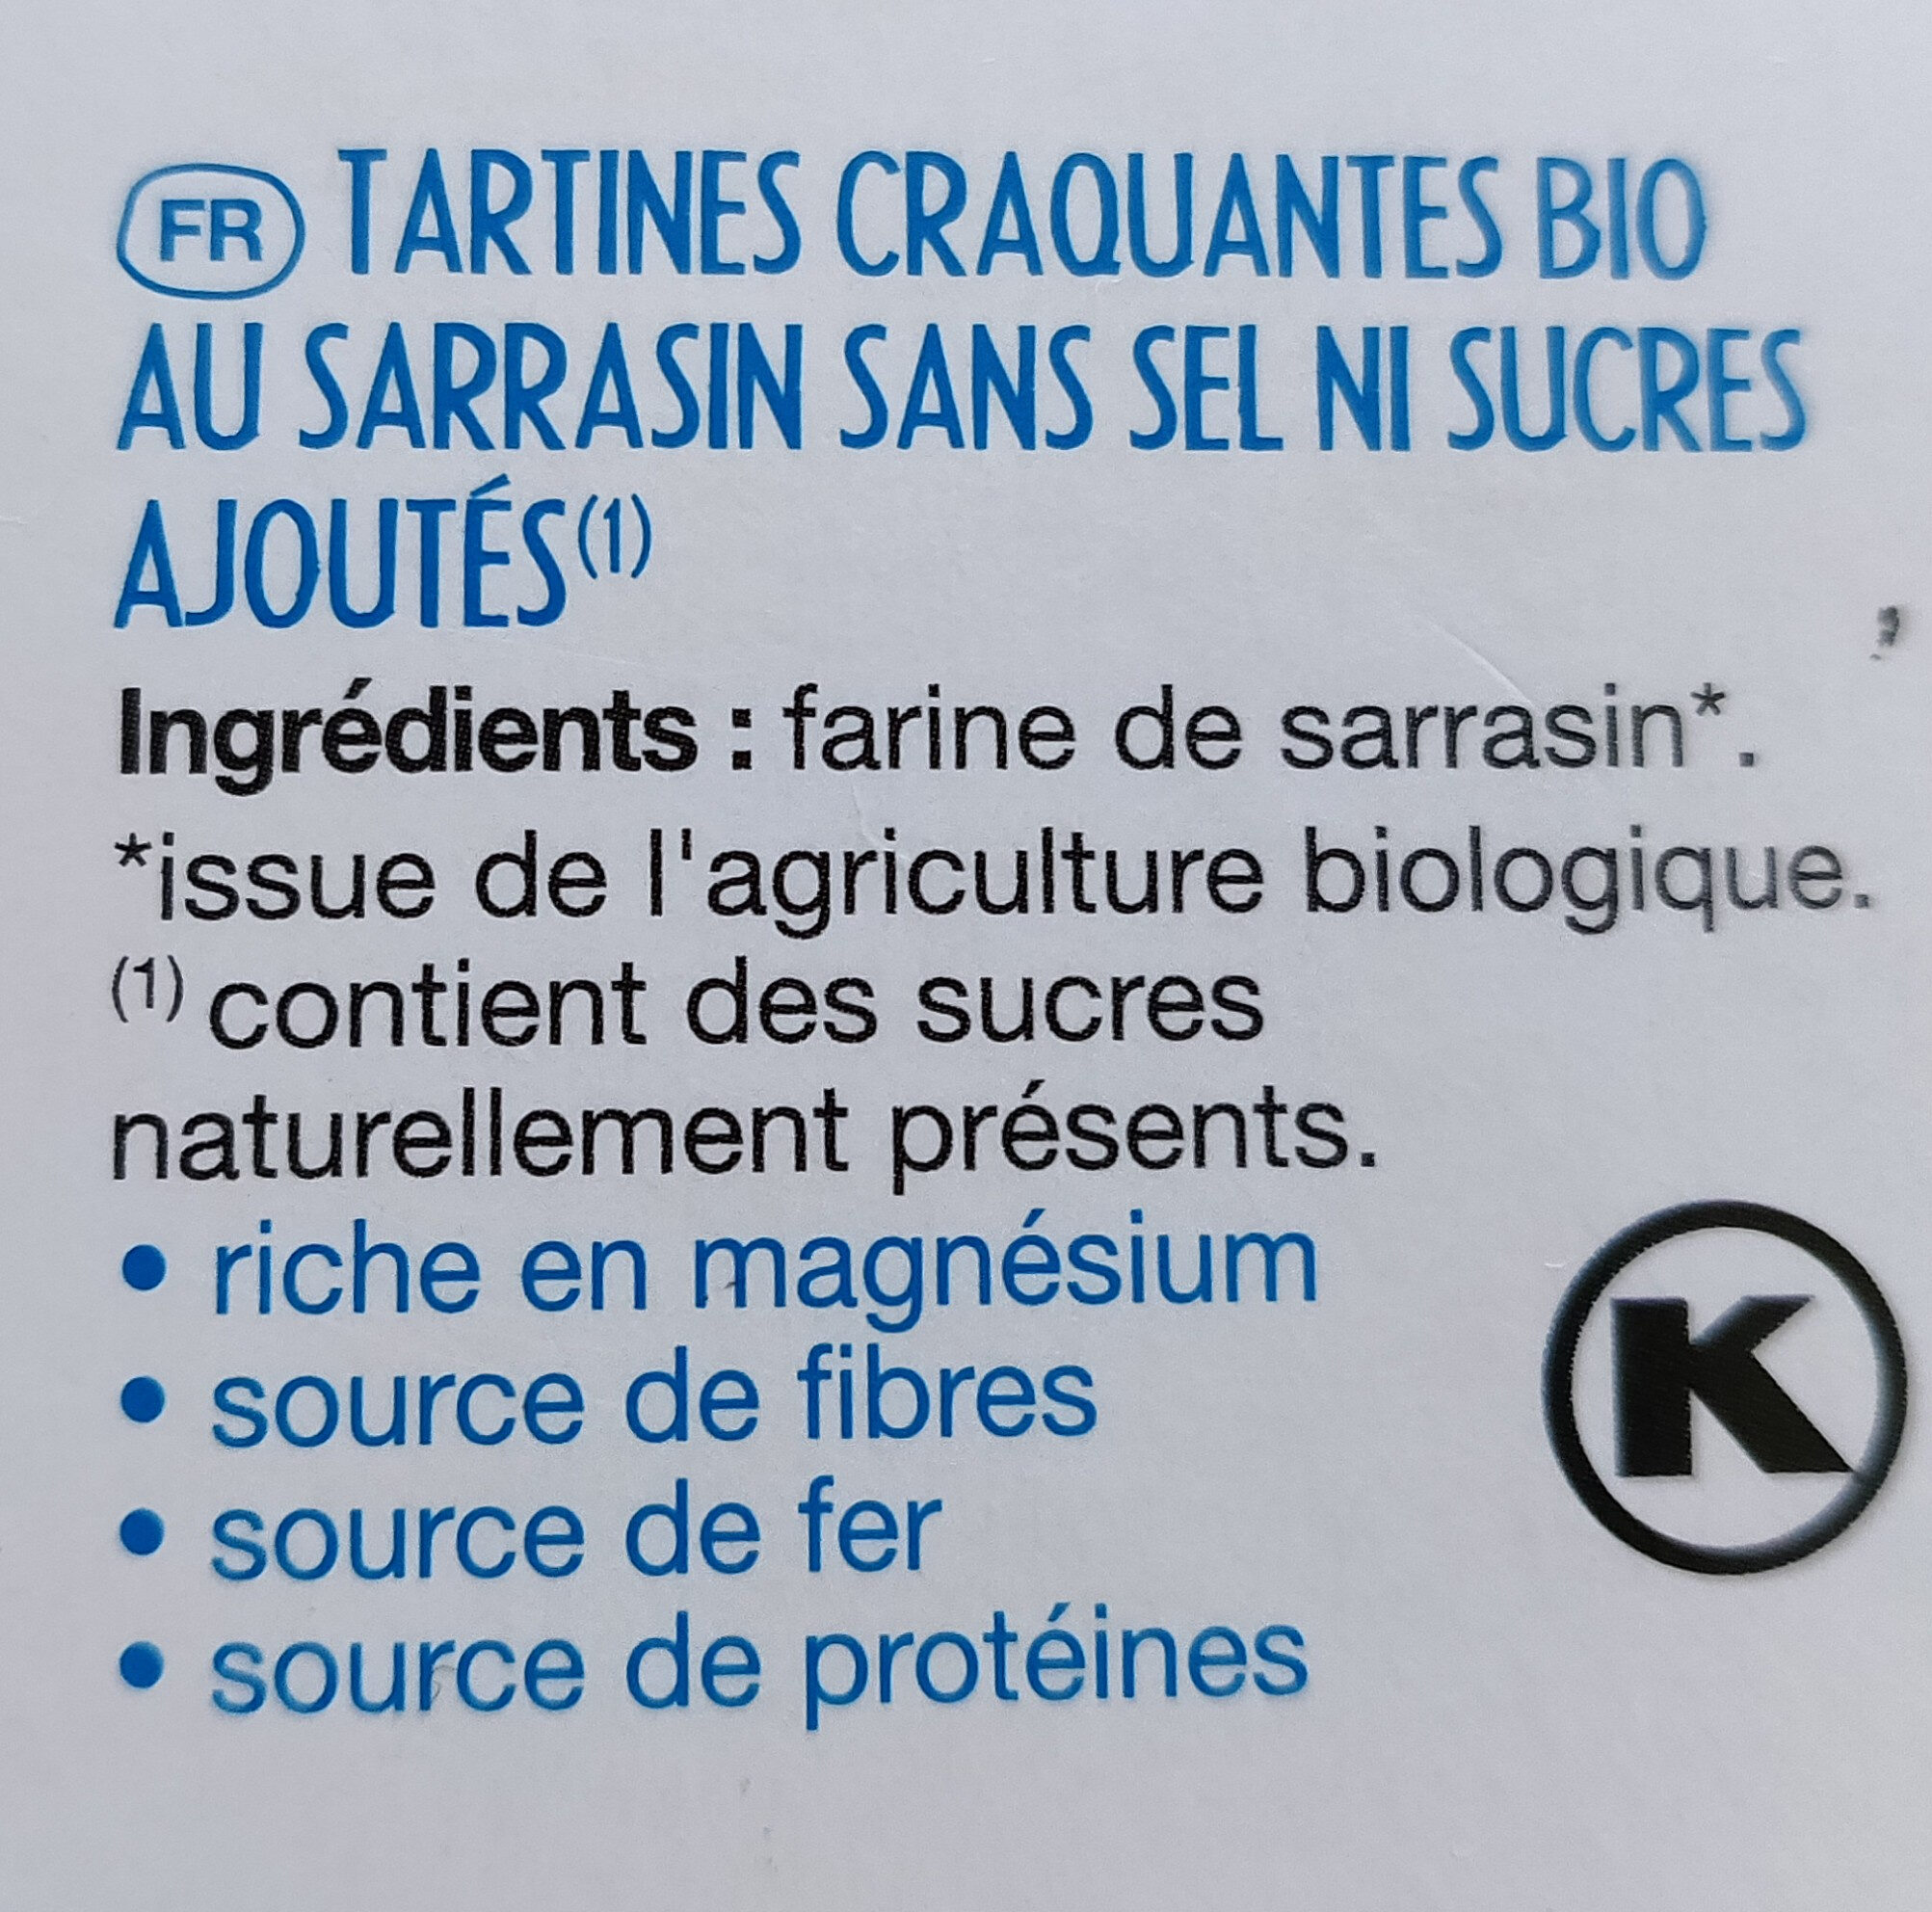 Tartines craquantes bio au sarrasin sans sel ni sucres ajoutés - Ingredients - fr